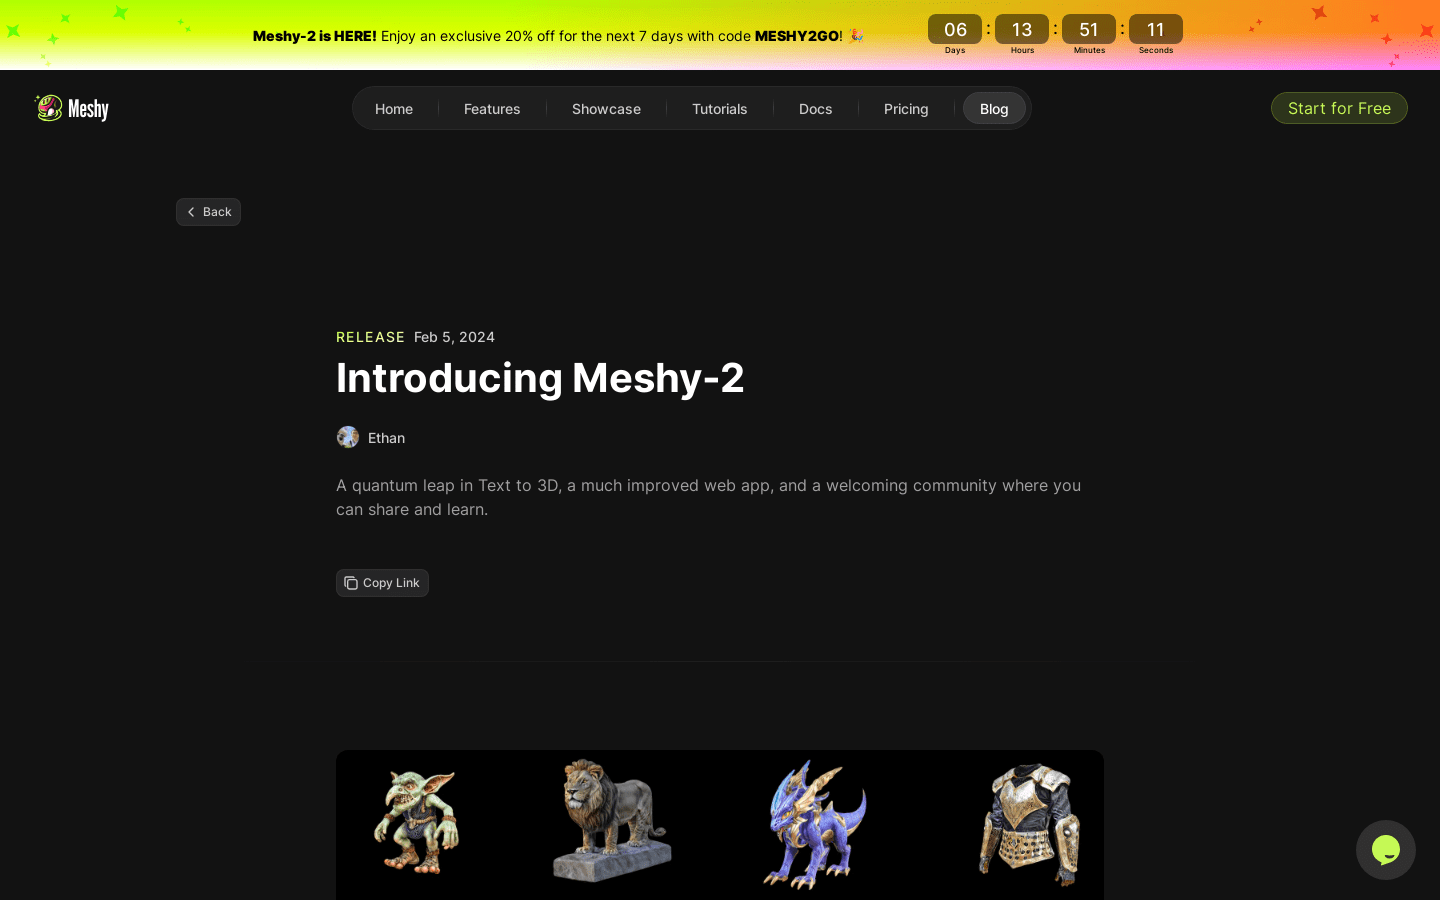 Meshy-2